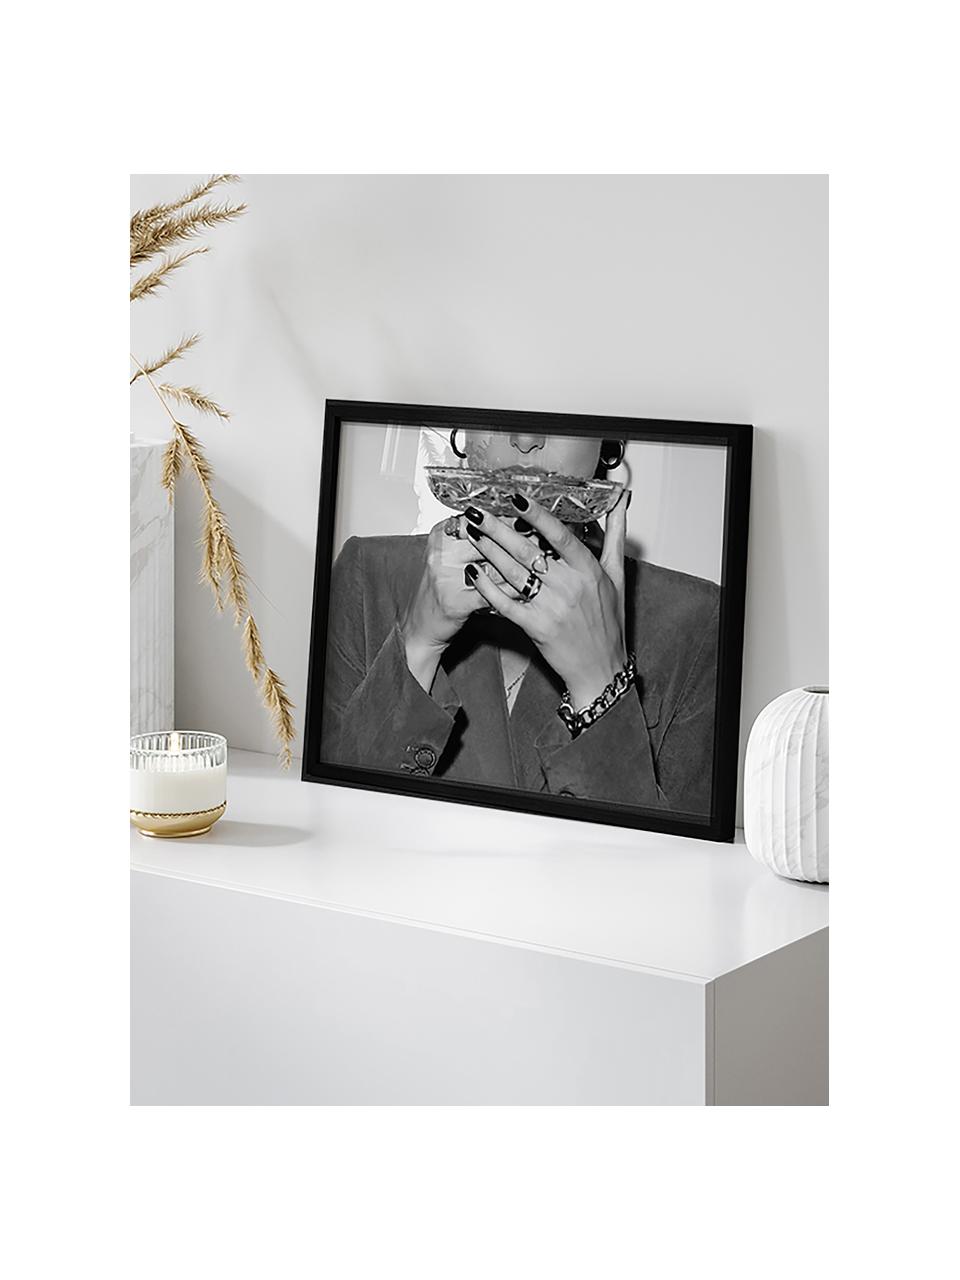 Gerahmte Fotografie Sexy Spirit, Rahmen: Buchenholz, FSC zertifizi, Bild: Digitaldruck auf Papier, , Front: Acrylglas, Schwarz, Weiß, Grautöne, B 43 x H 33 cm